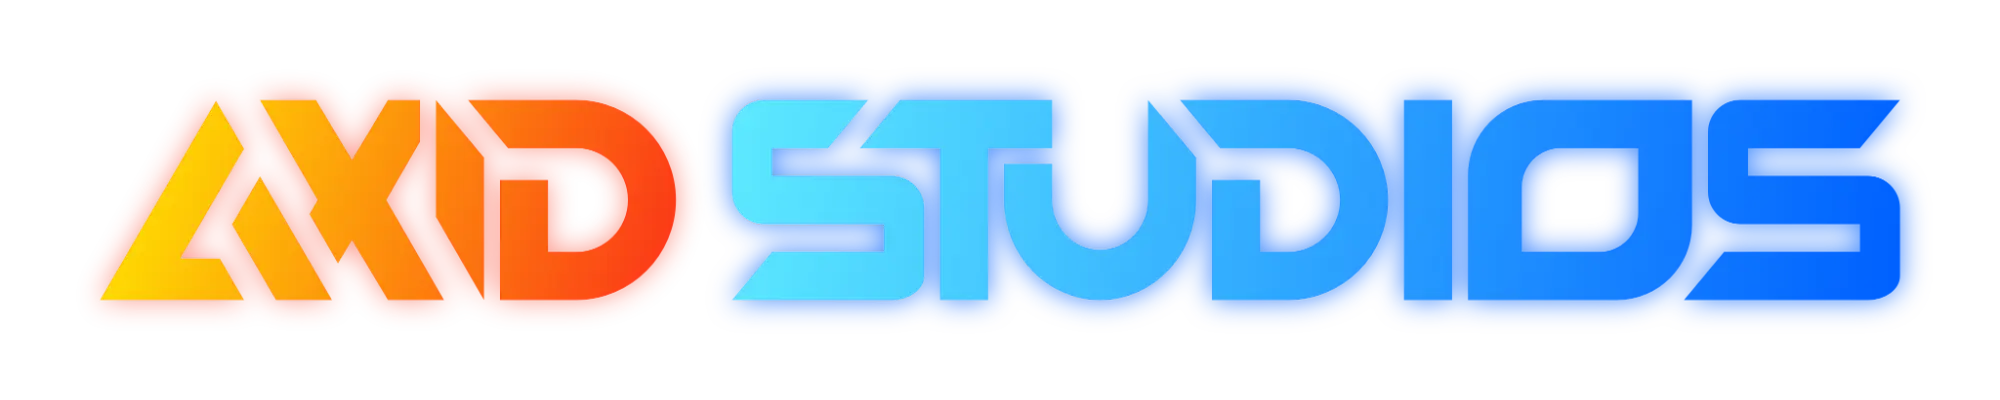 Axid Studios Logo